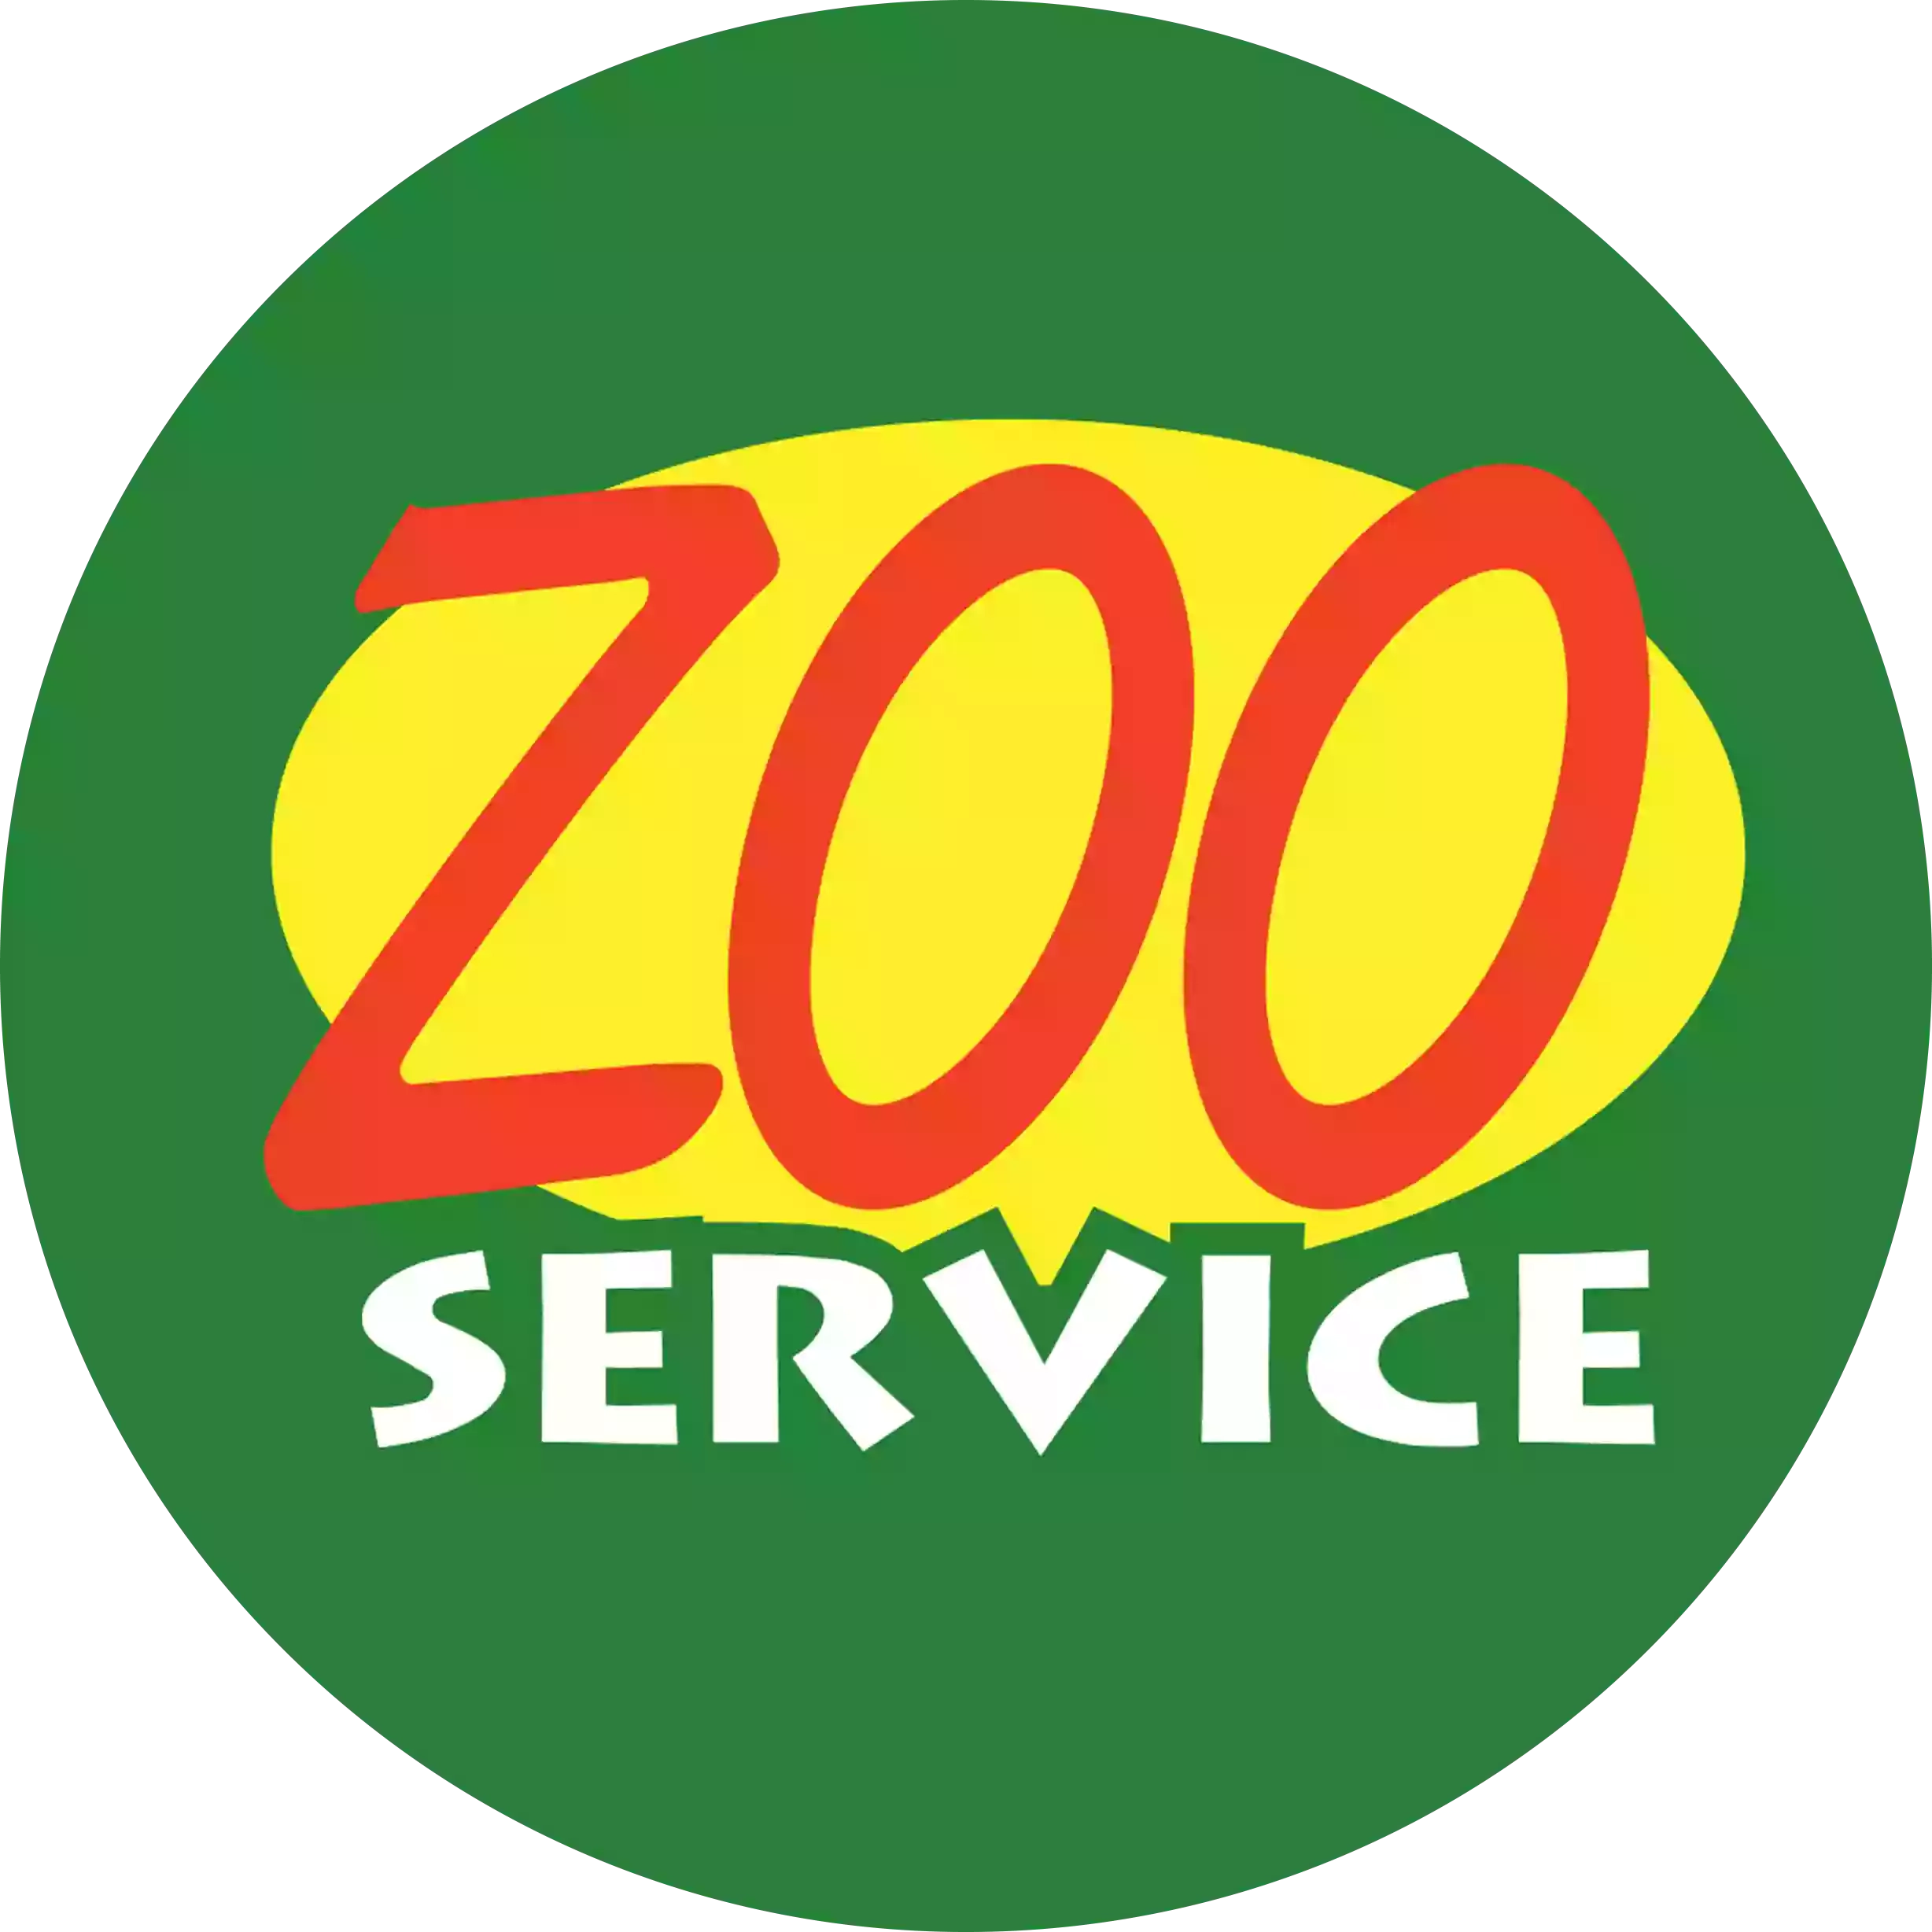 Zoo Service - Emilia